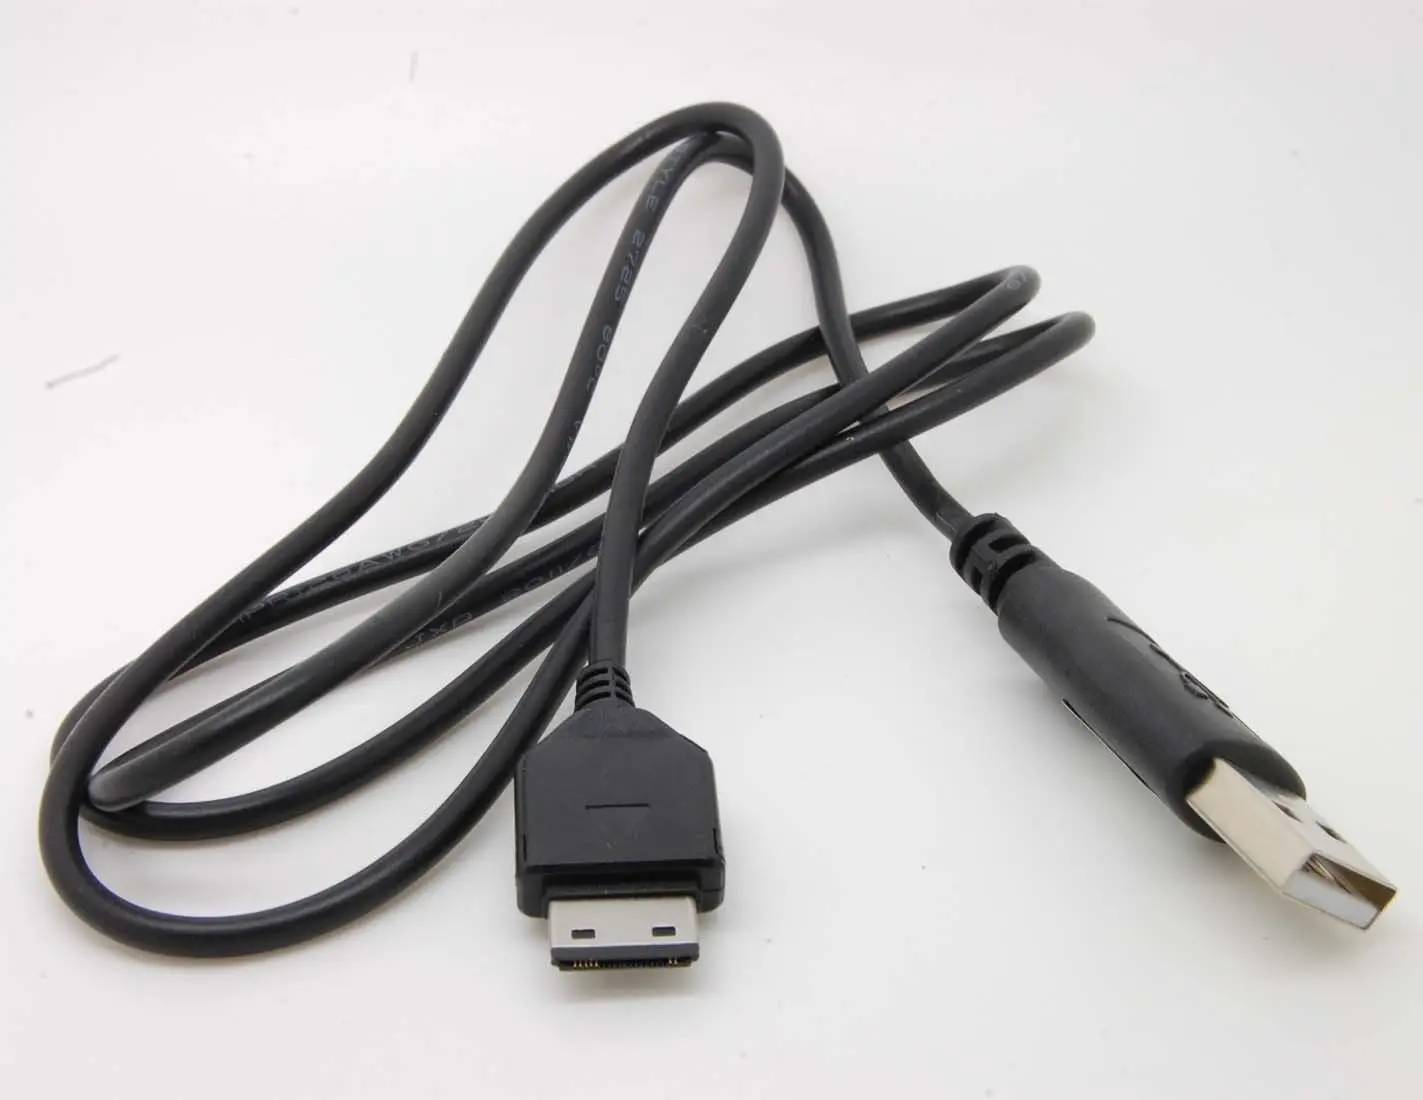 USB data &charger cable for SAMSUNG DM-S105 GT-S3650 GT-S5230 Instinct Mini Instinct S30 Pixon M8800 SCH-i770 i910 R200 R210